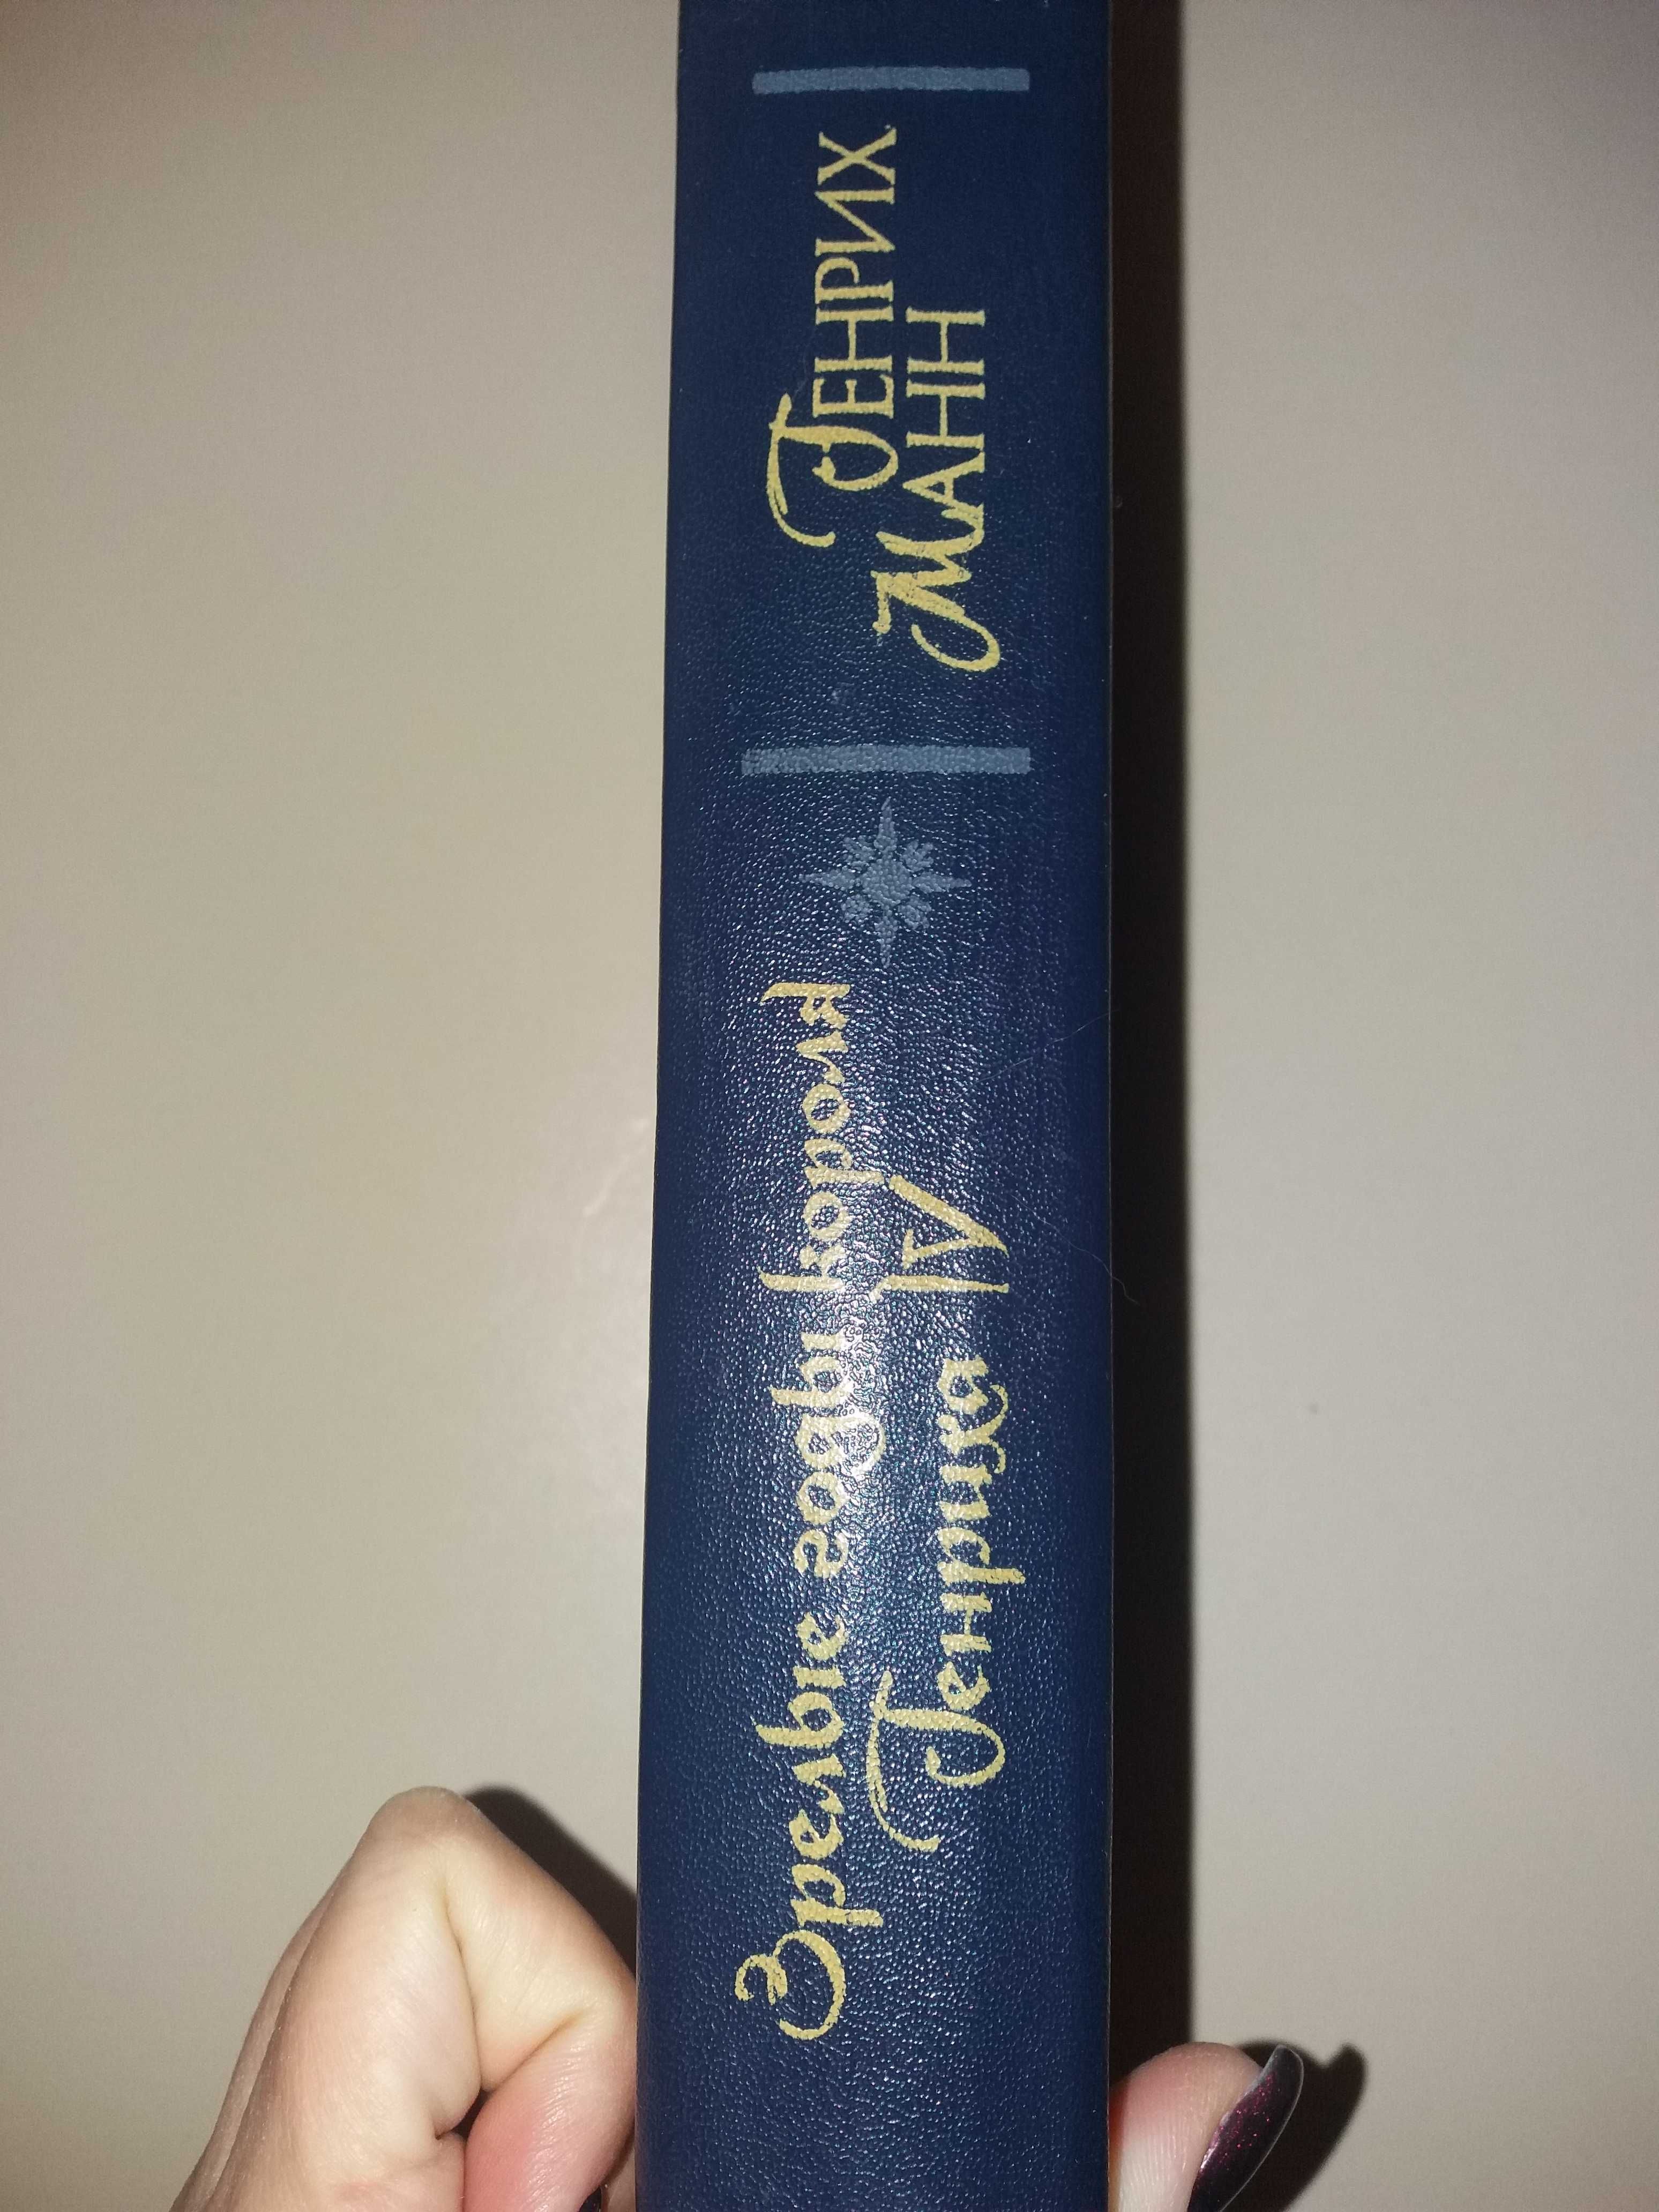 Книга генрих манн роман "зрелые годы короля генриха іv"